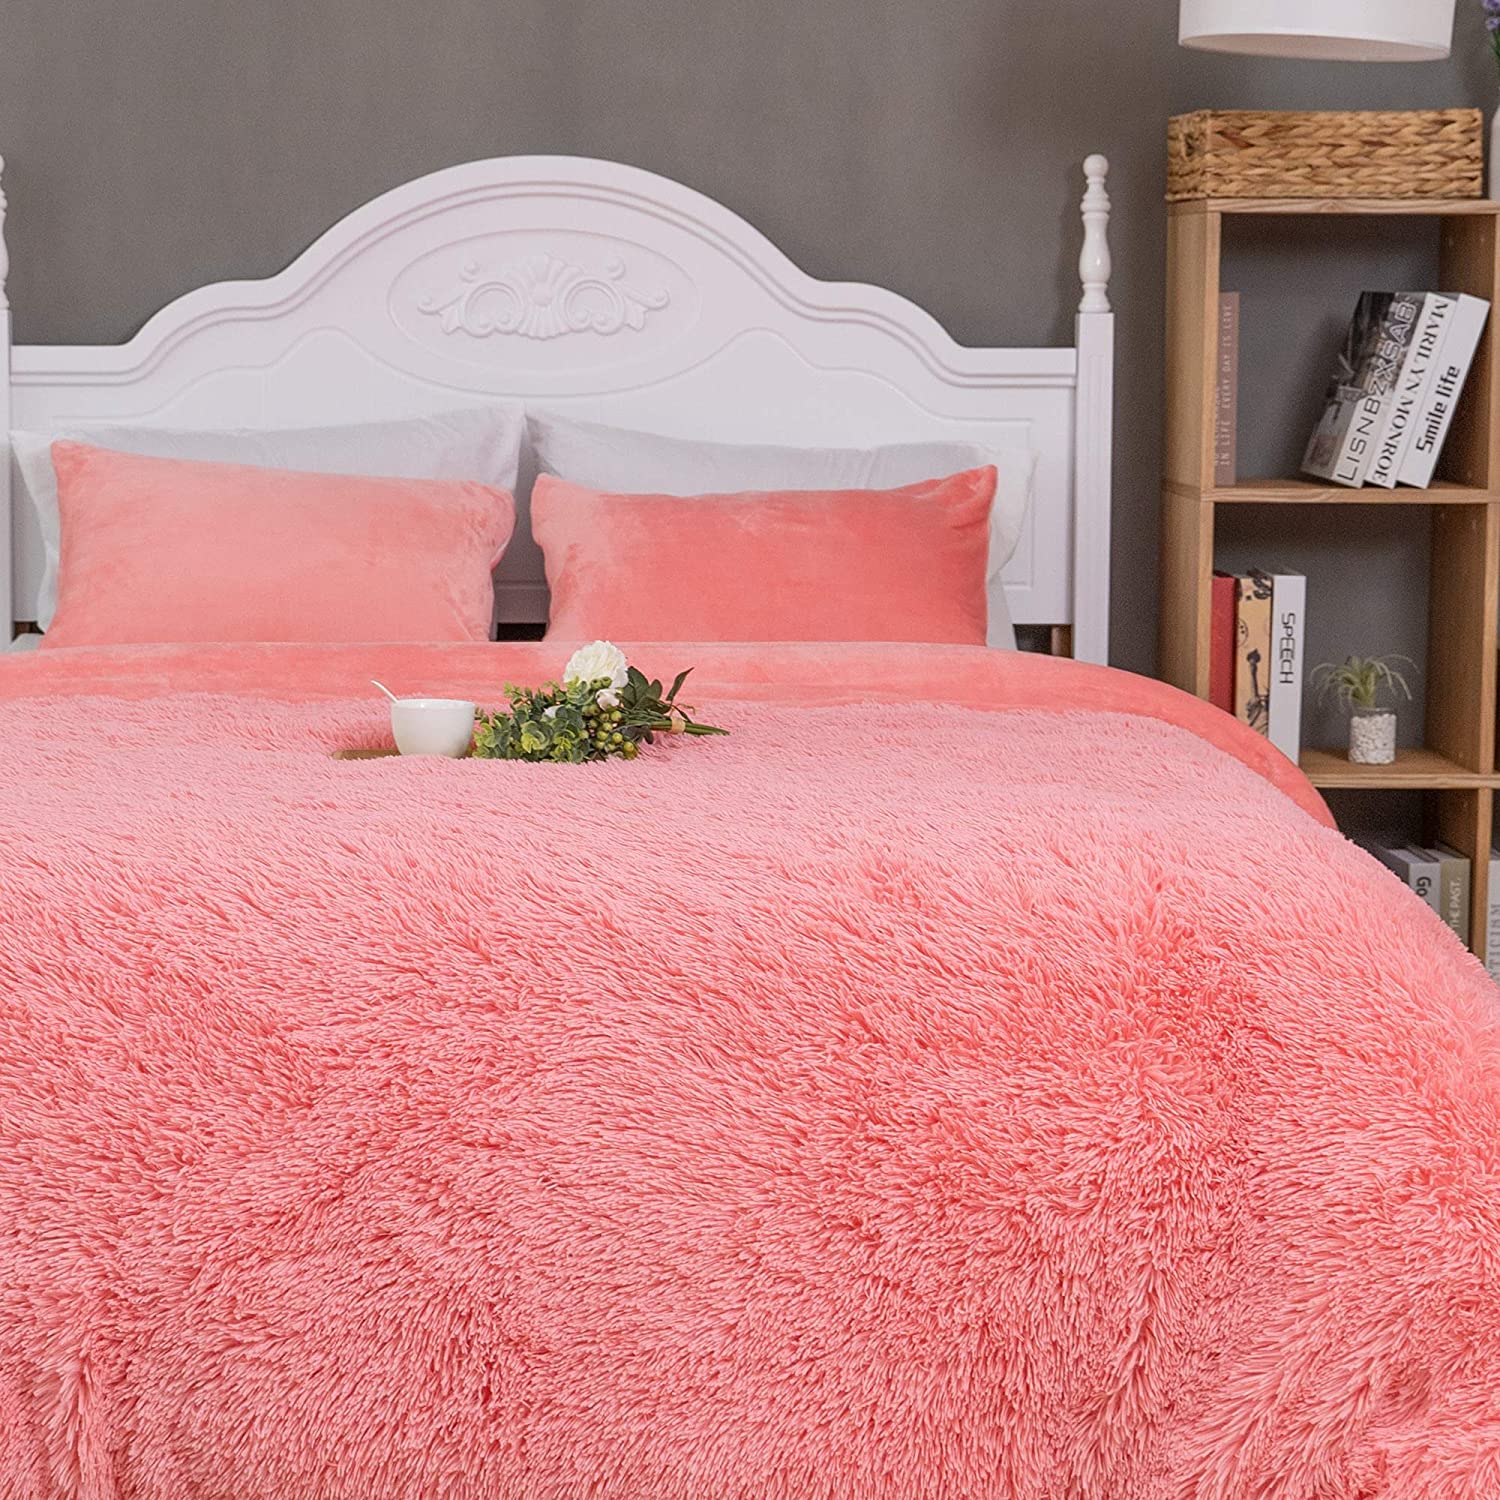 Choshome Shaggy Fluffy King Faux Fur Duvet Cover Set Pink Cozy Luxury Plush Qui Ebay